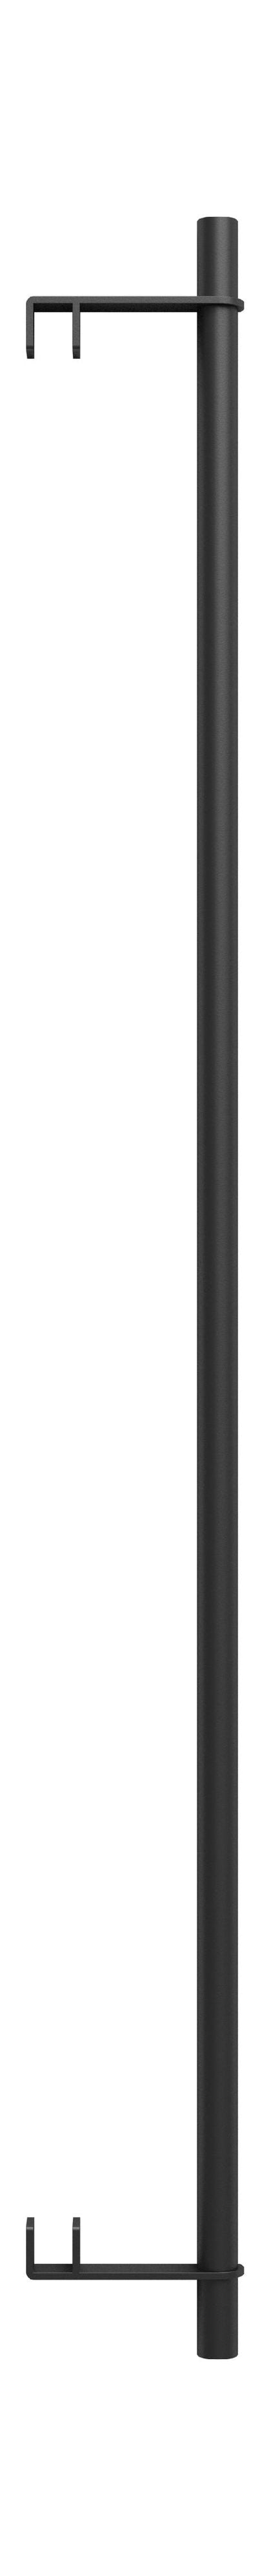 Moebe -Regalsystem/Wandregalkleidung Bar 85 cm, schwarz